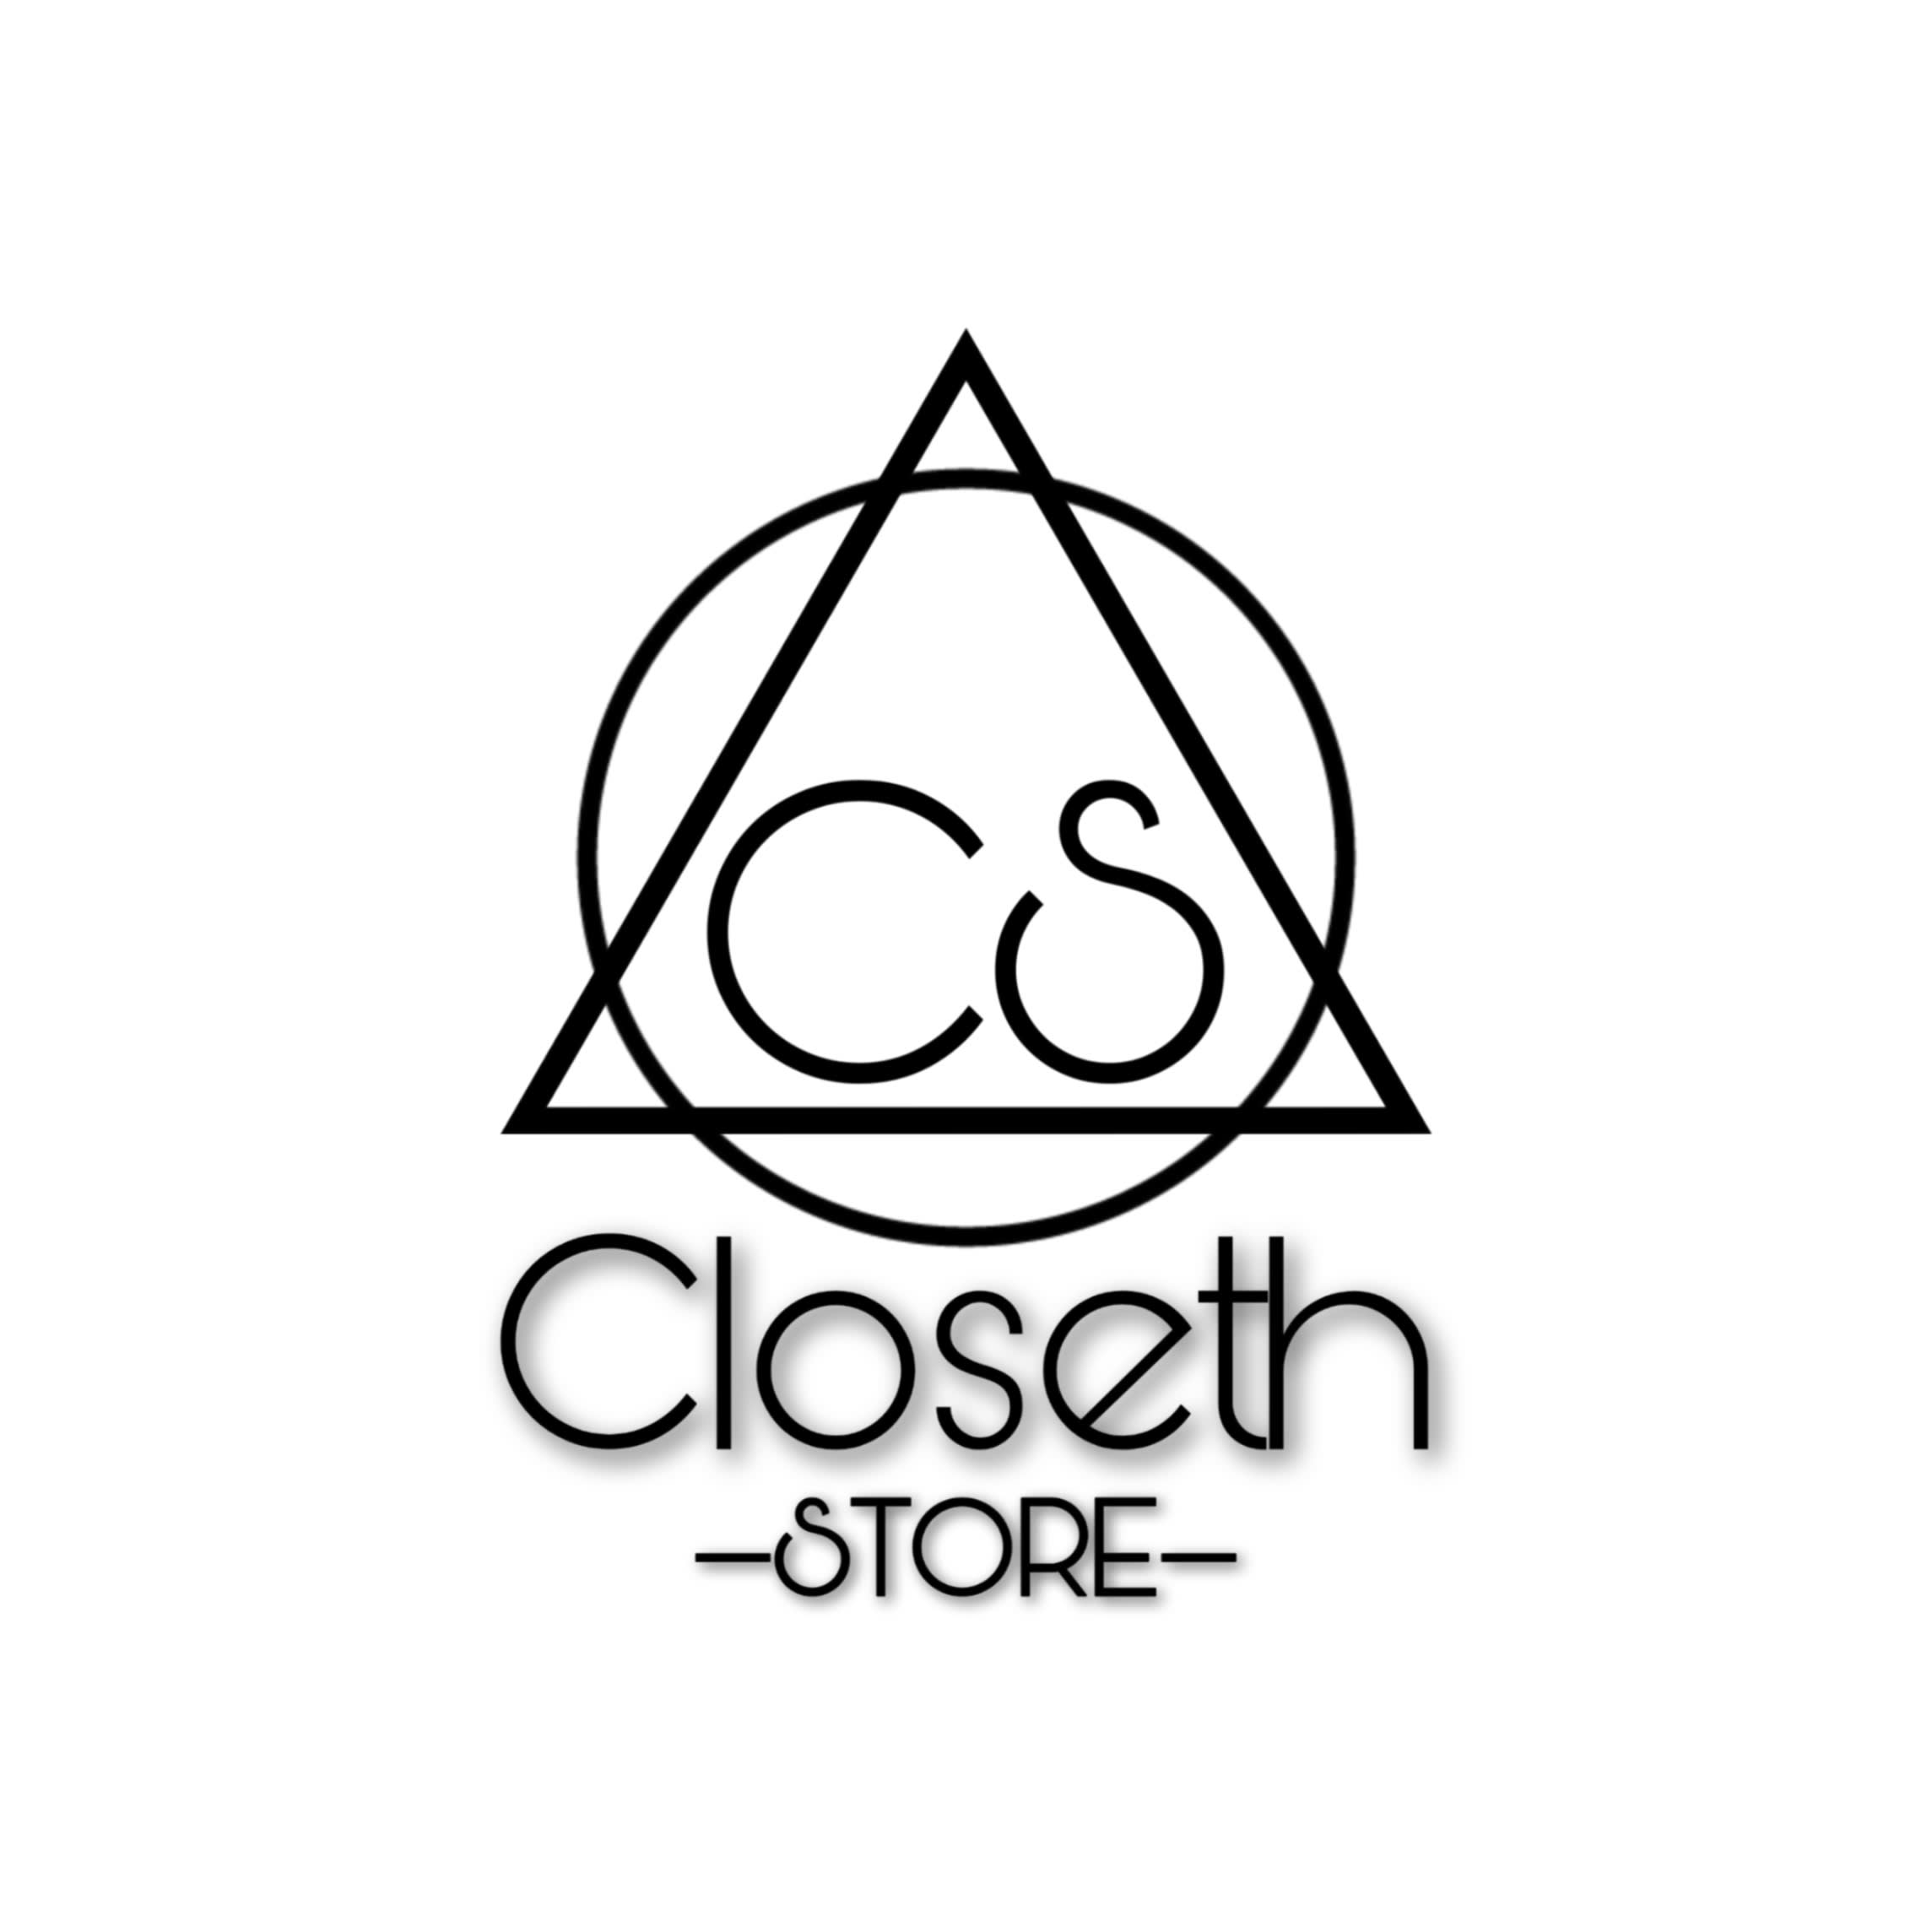 Closeth